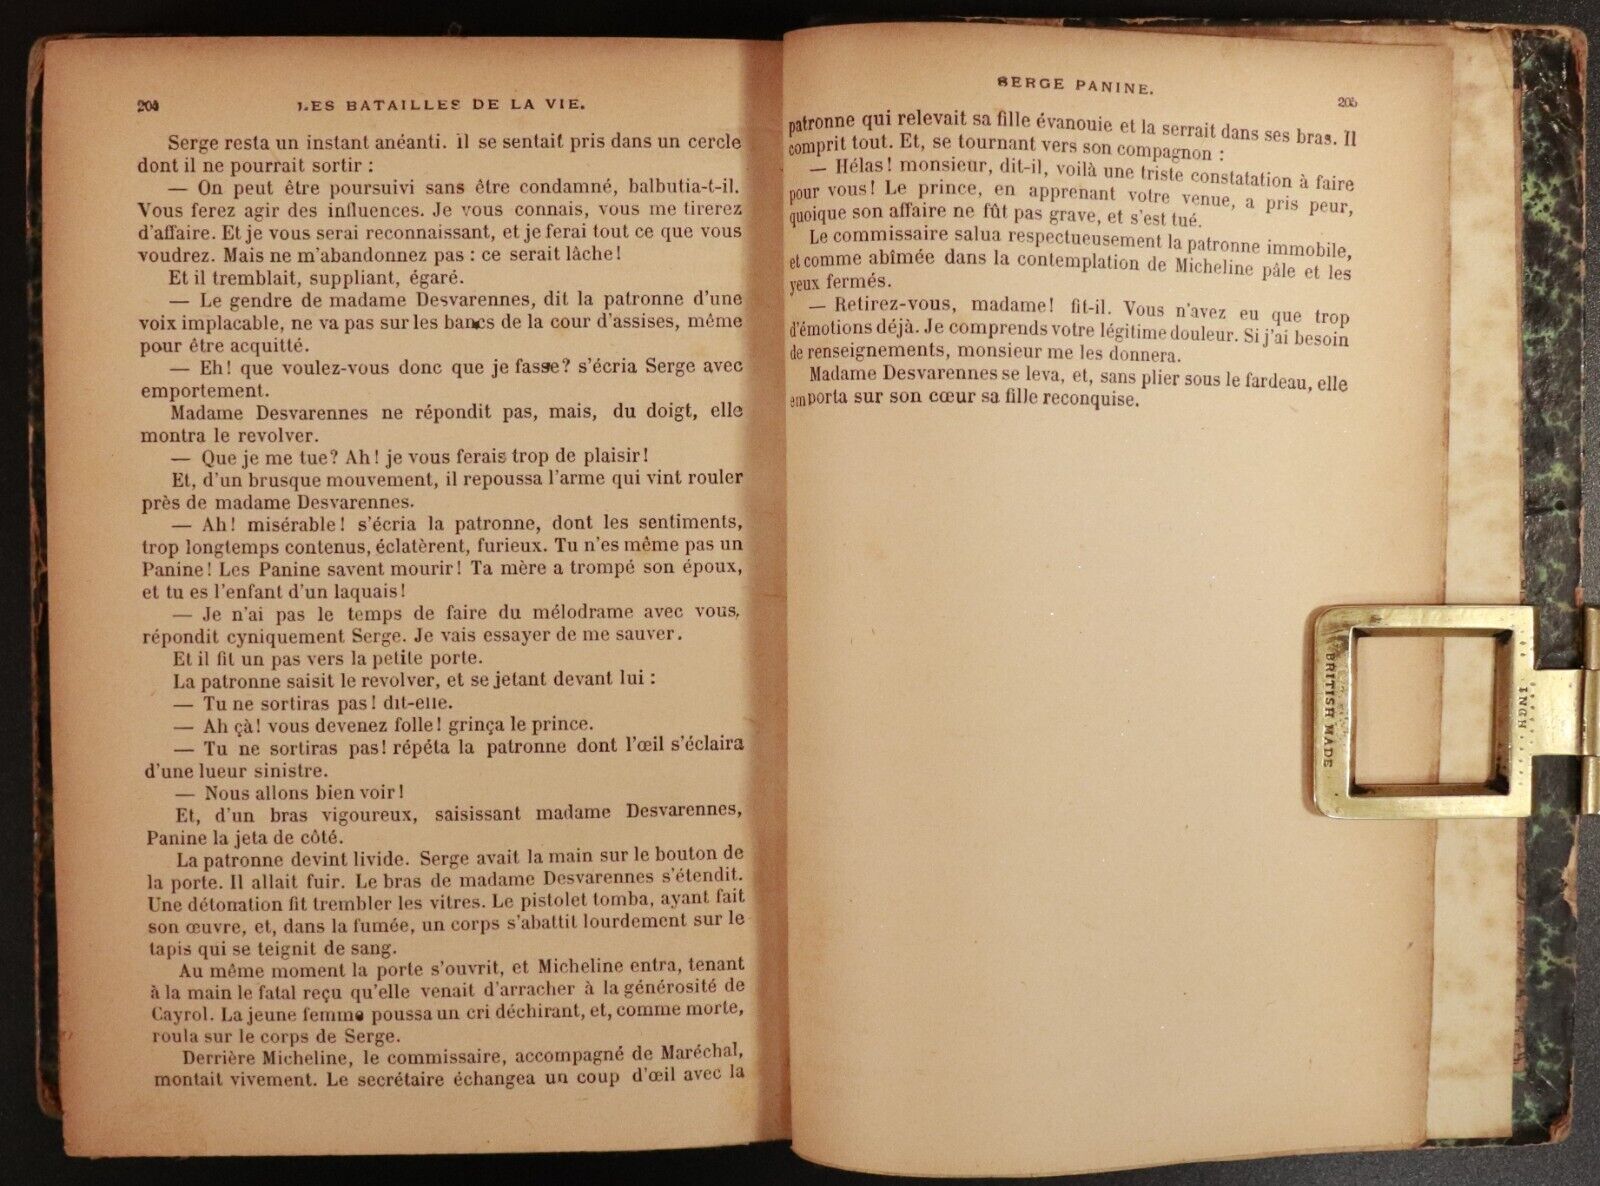 c1882 Le Maître De Forges by Georges Ohnet Antiquarian French Fiction Book